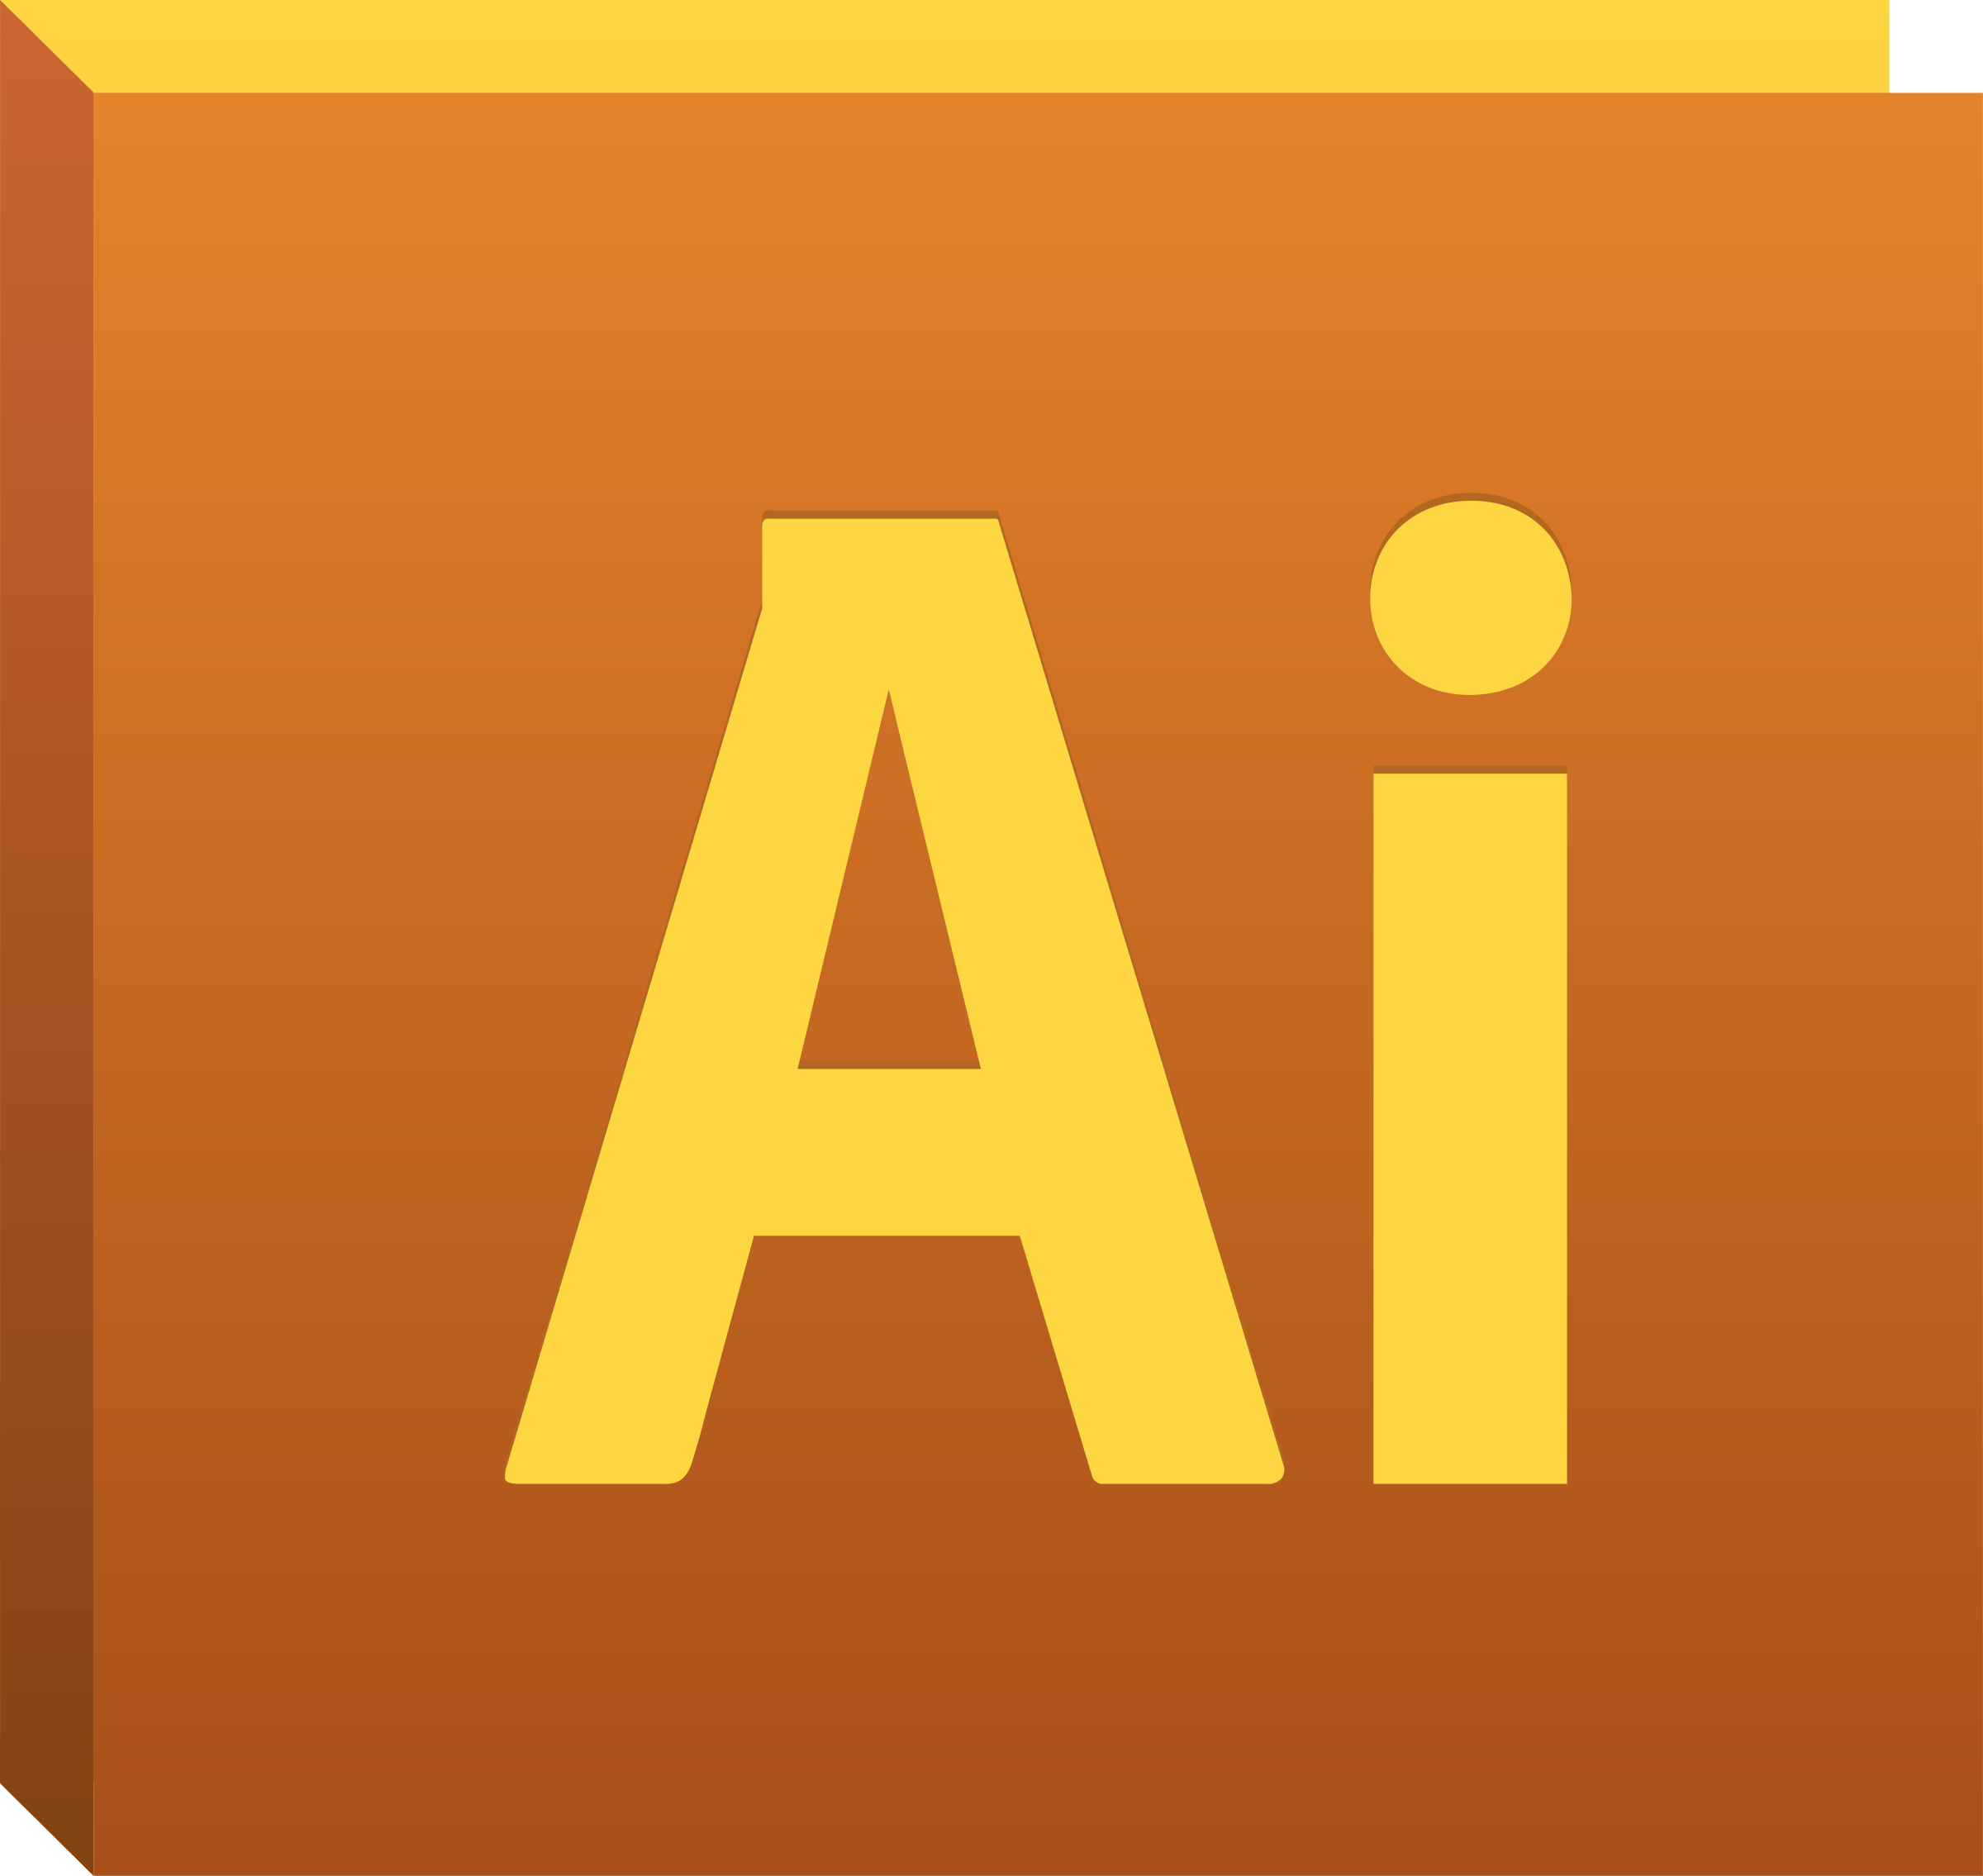 Illustrator Logo - Adobe Illustrator CS5 Logo PNG Transparent & SVG Vector - Freebie Supply